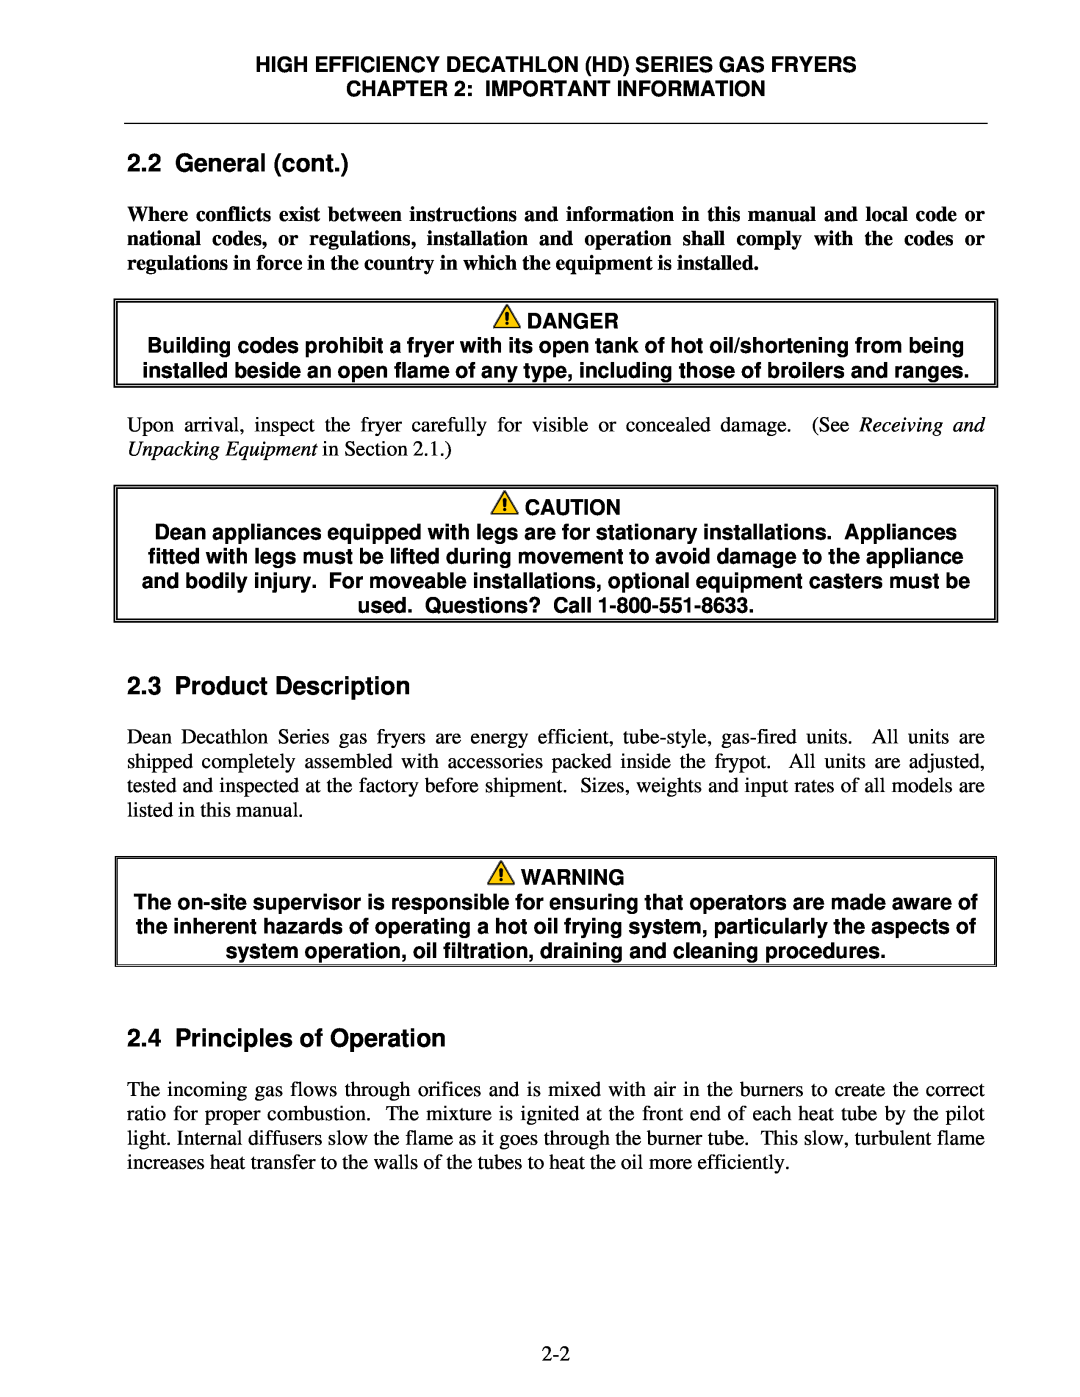 Frymaster FPHD65 operation manual General cont, Product Description, Principles of Operation, Important Information, Danger 